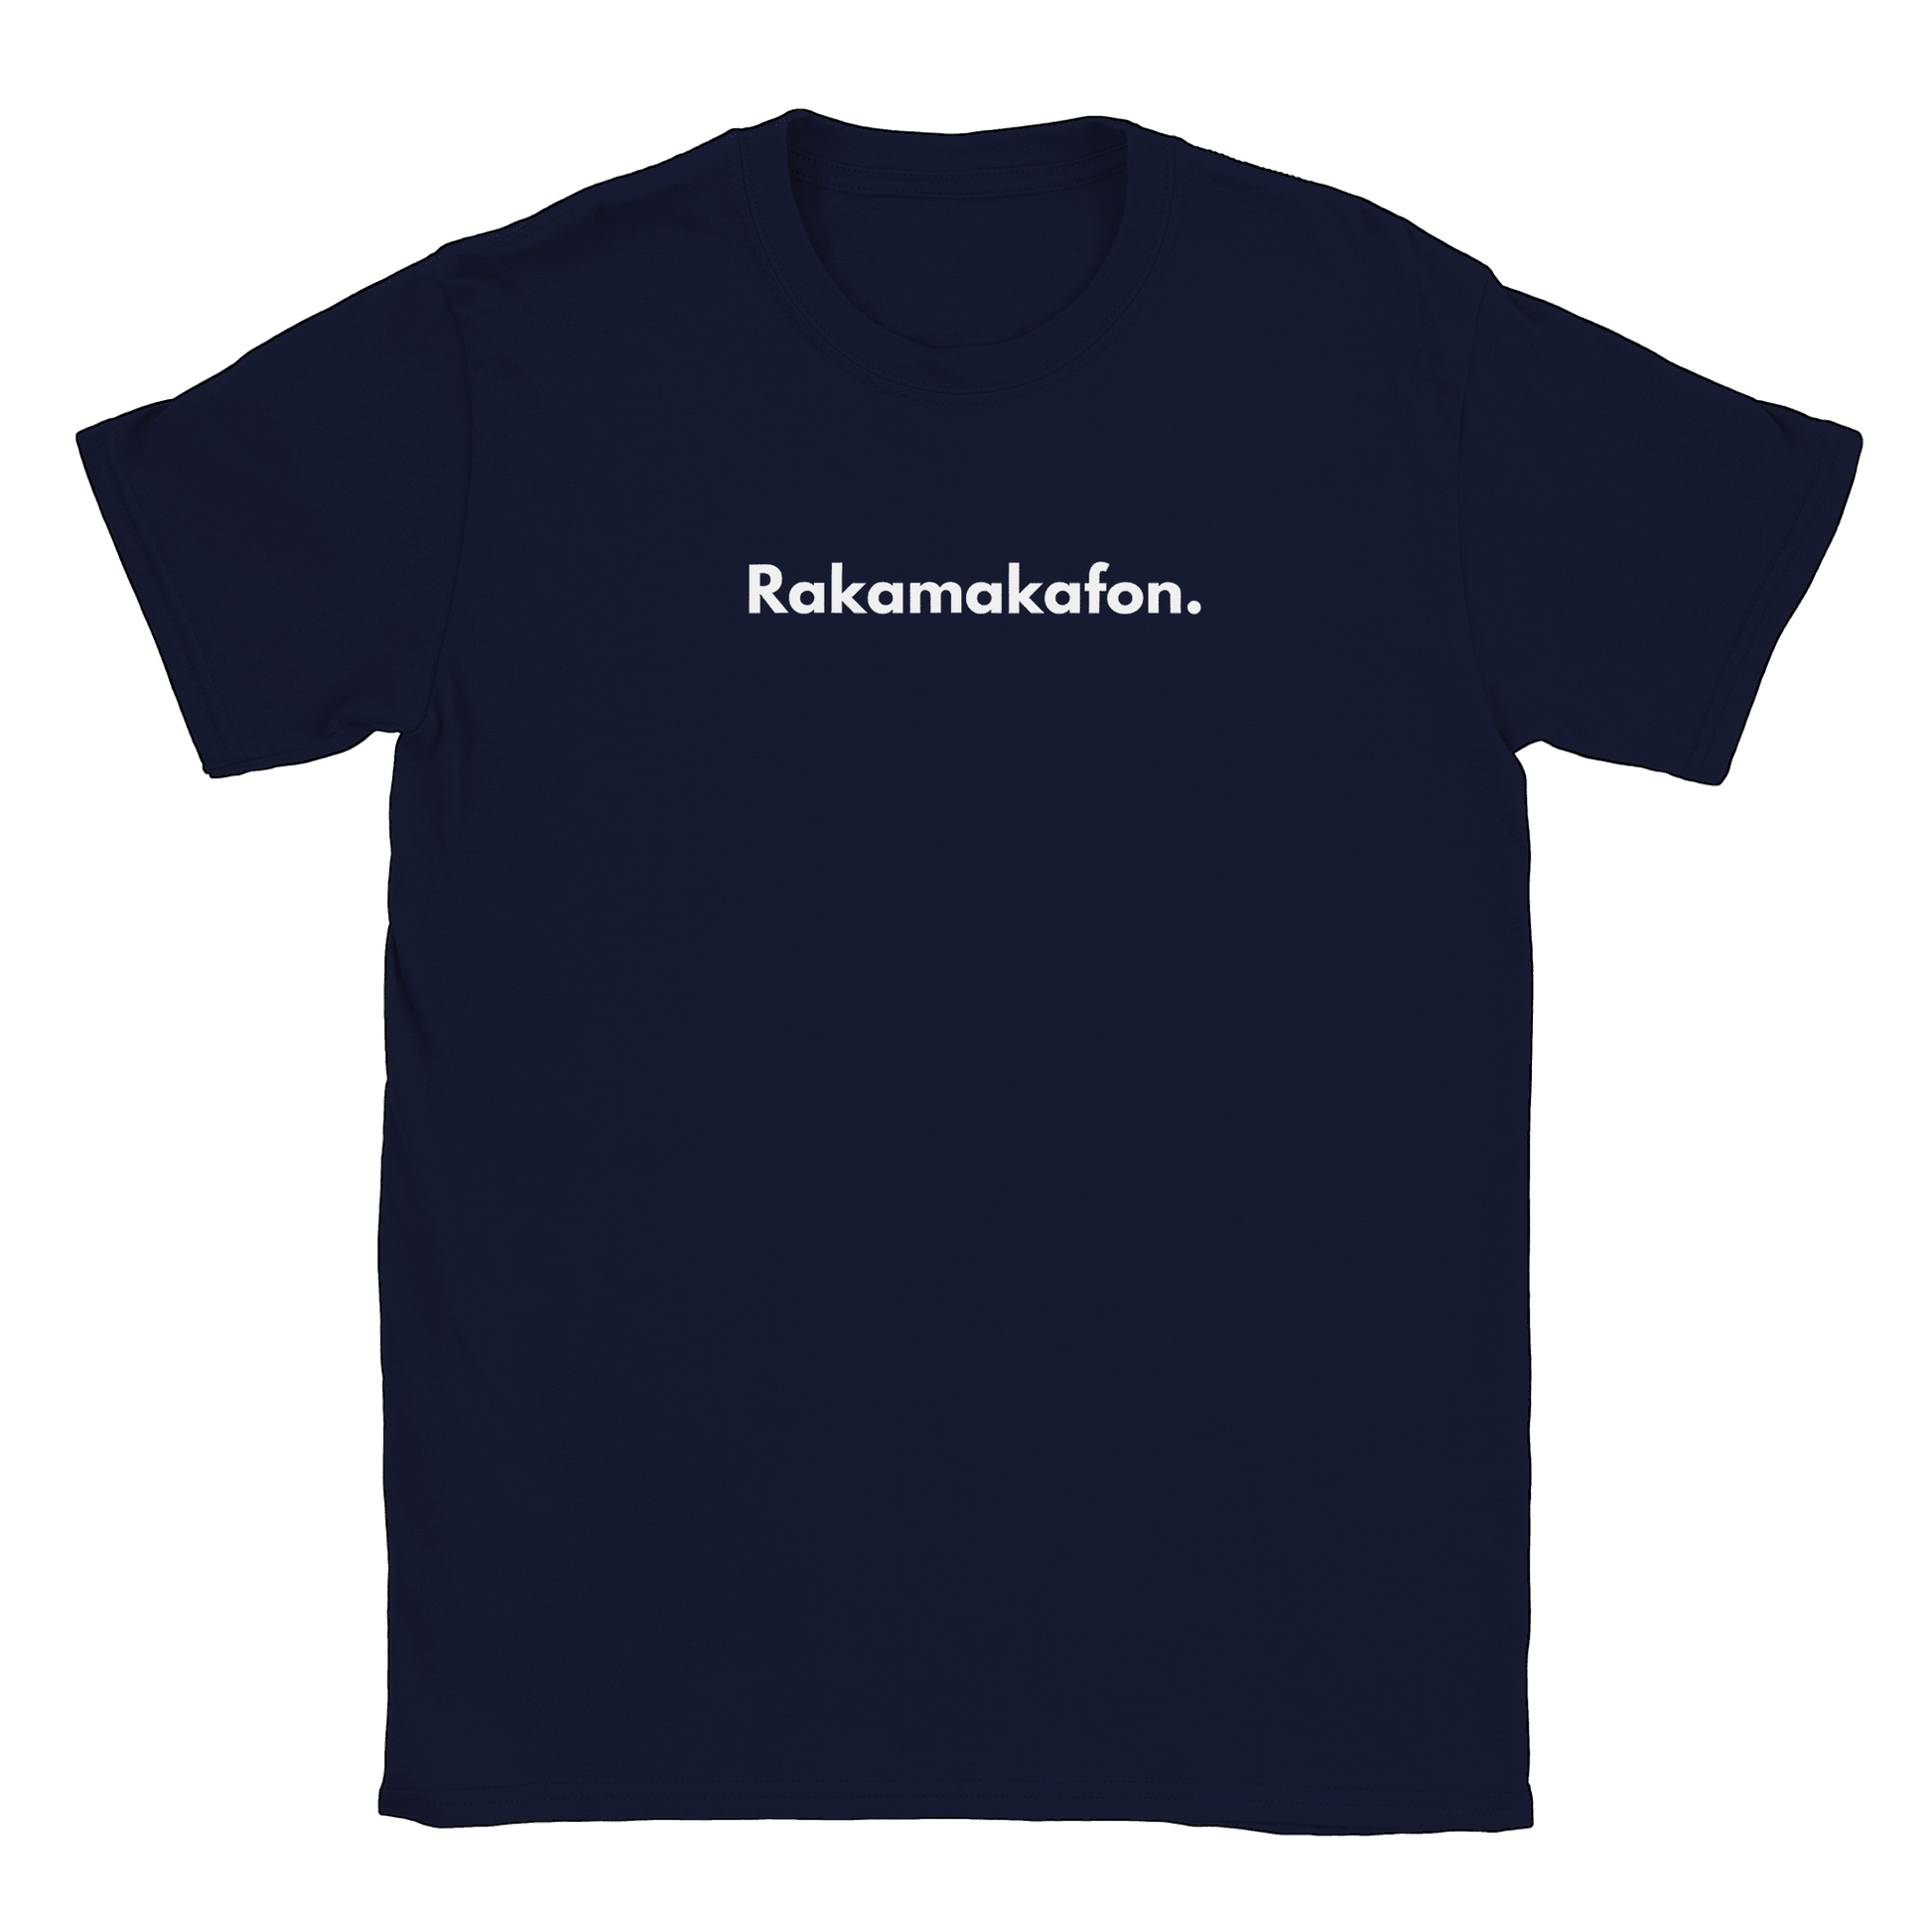 Rakamakafon - T-shirt Navy